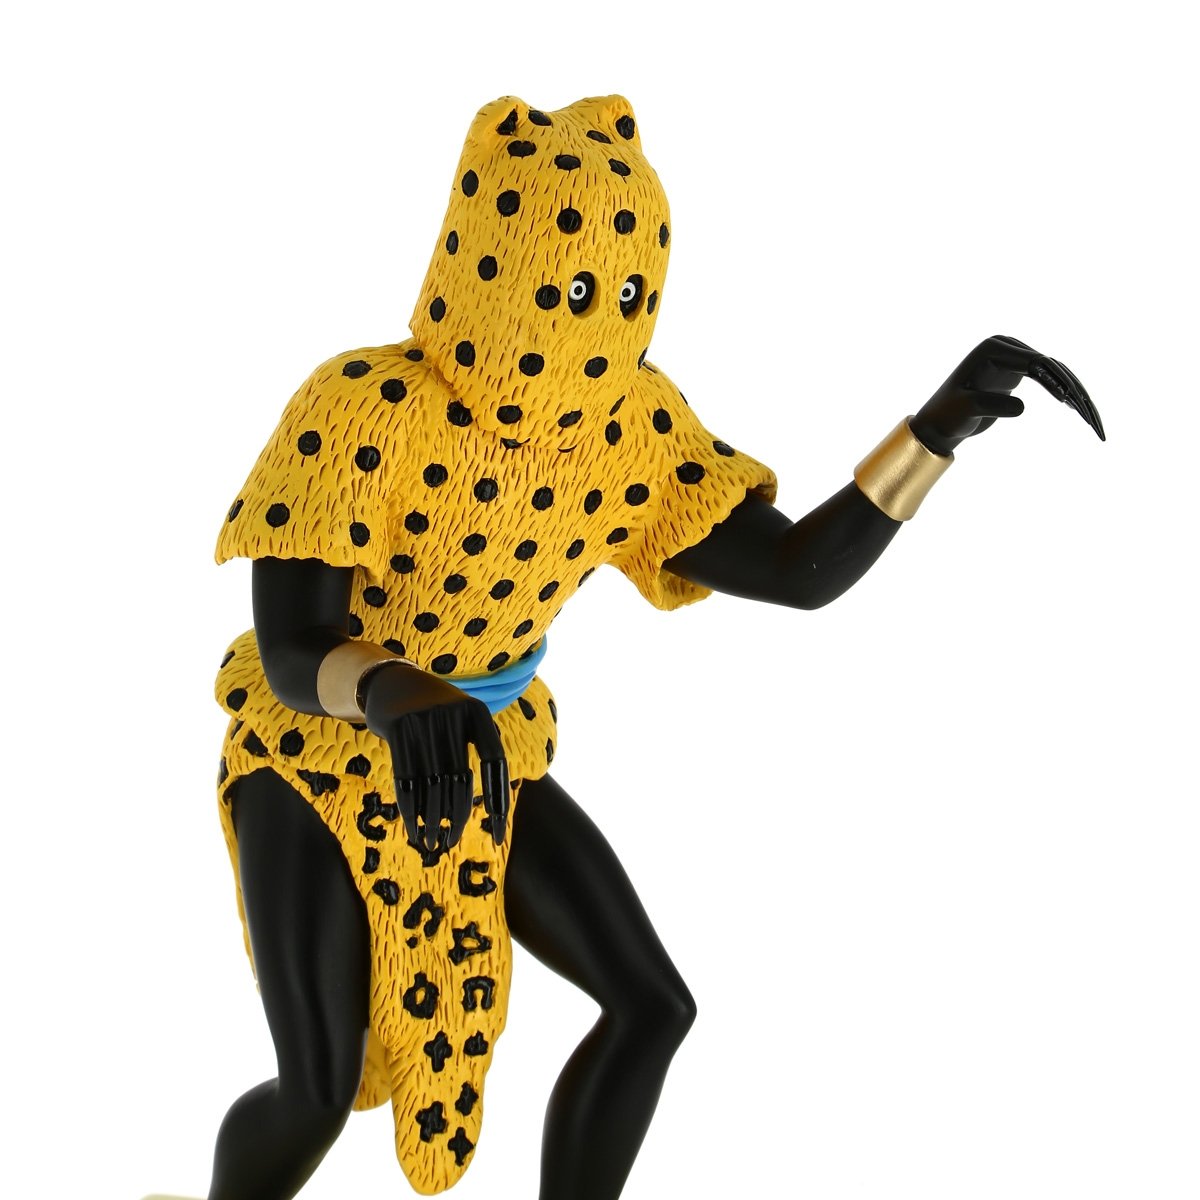 Leopard-man resin statue "Musée Imaginaire" collection